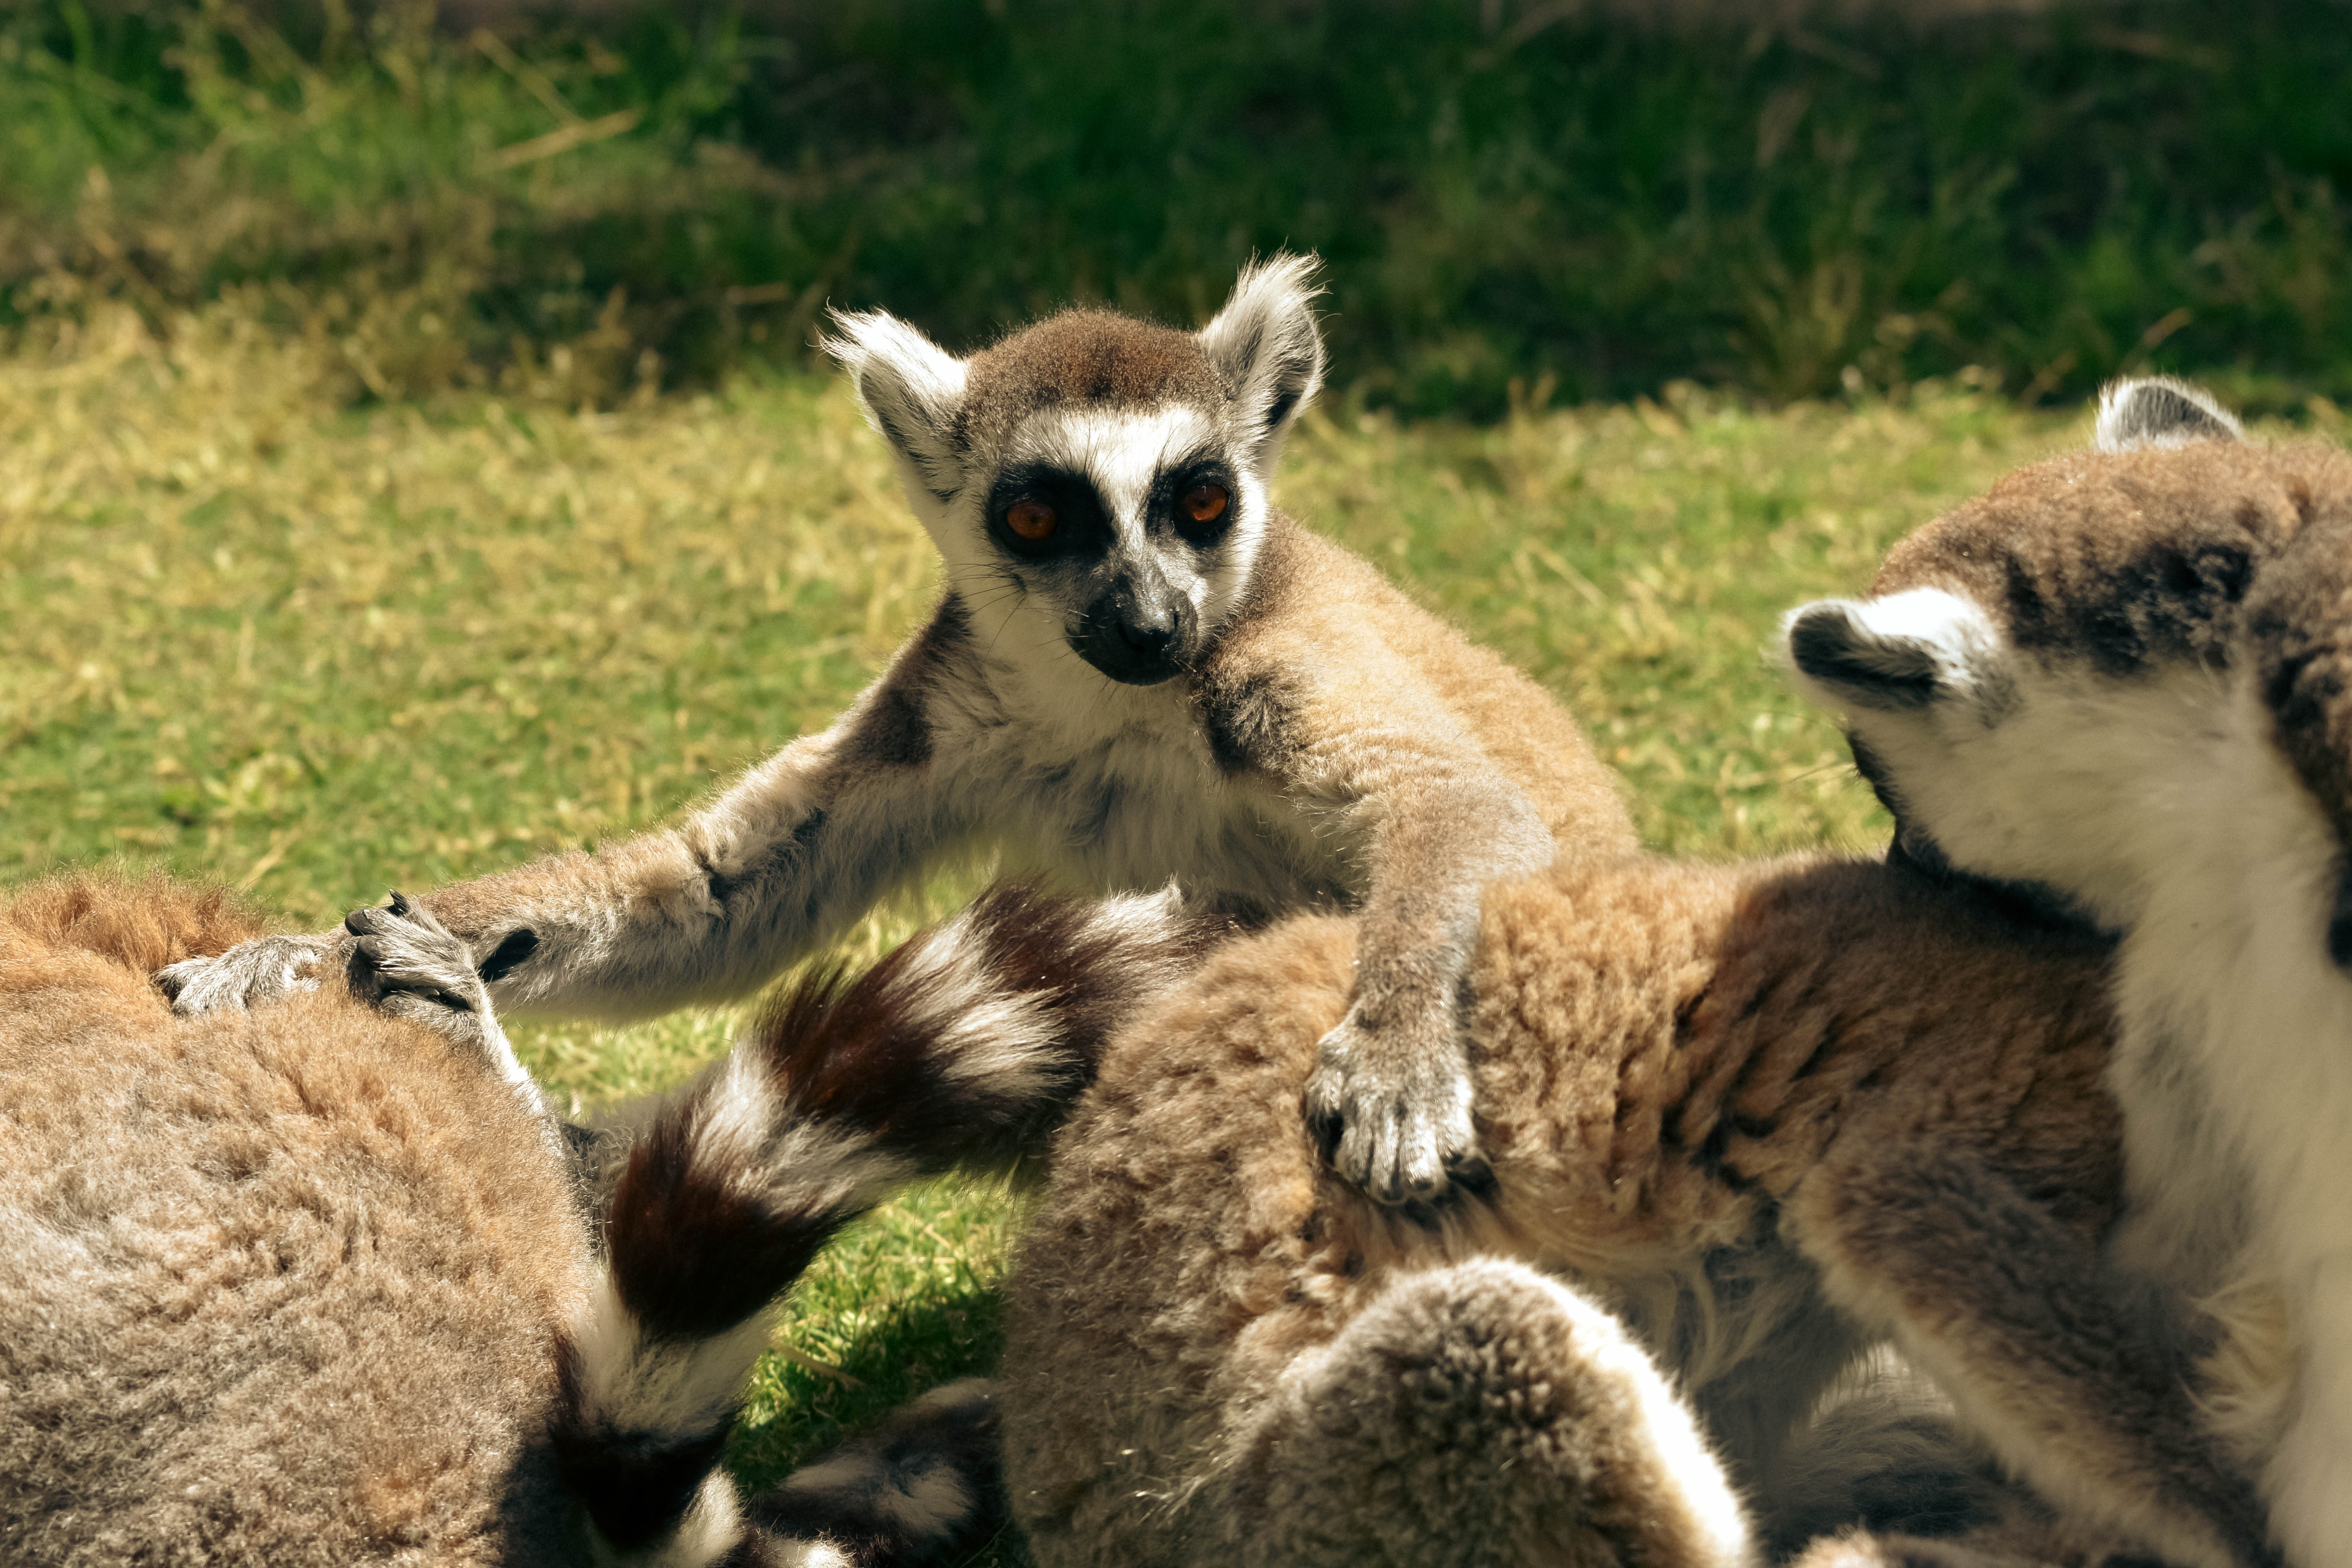 lemurs farma of rhodes